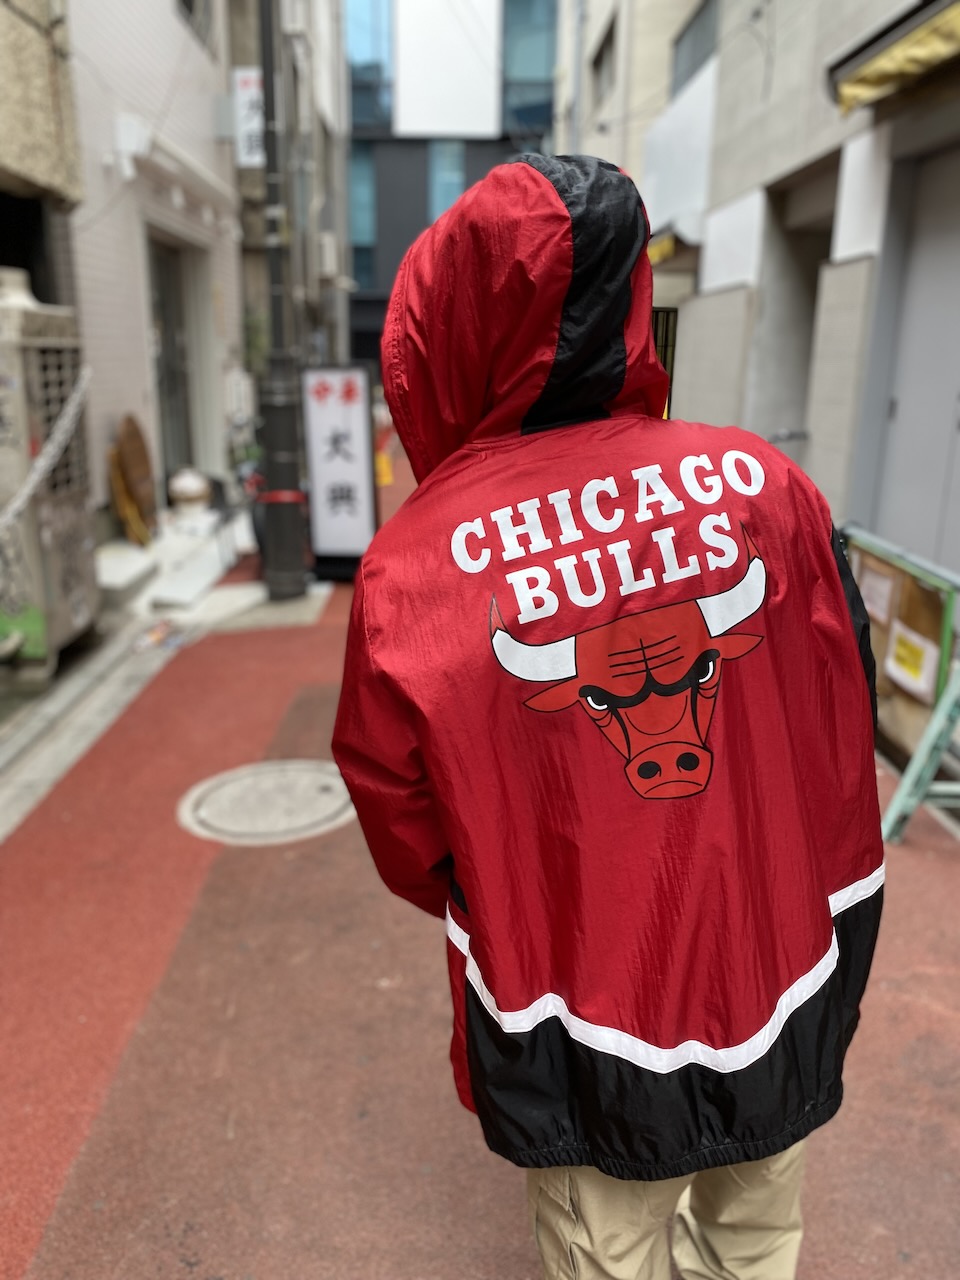 Bulls pullover style – upperupper